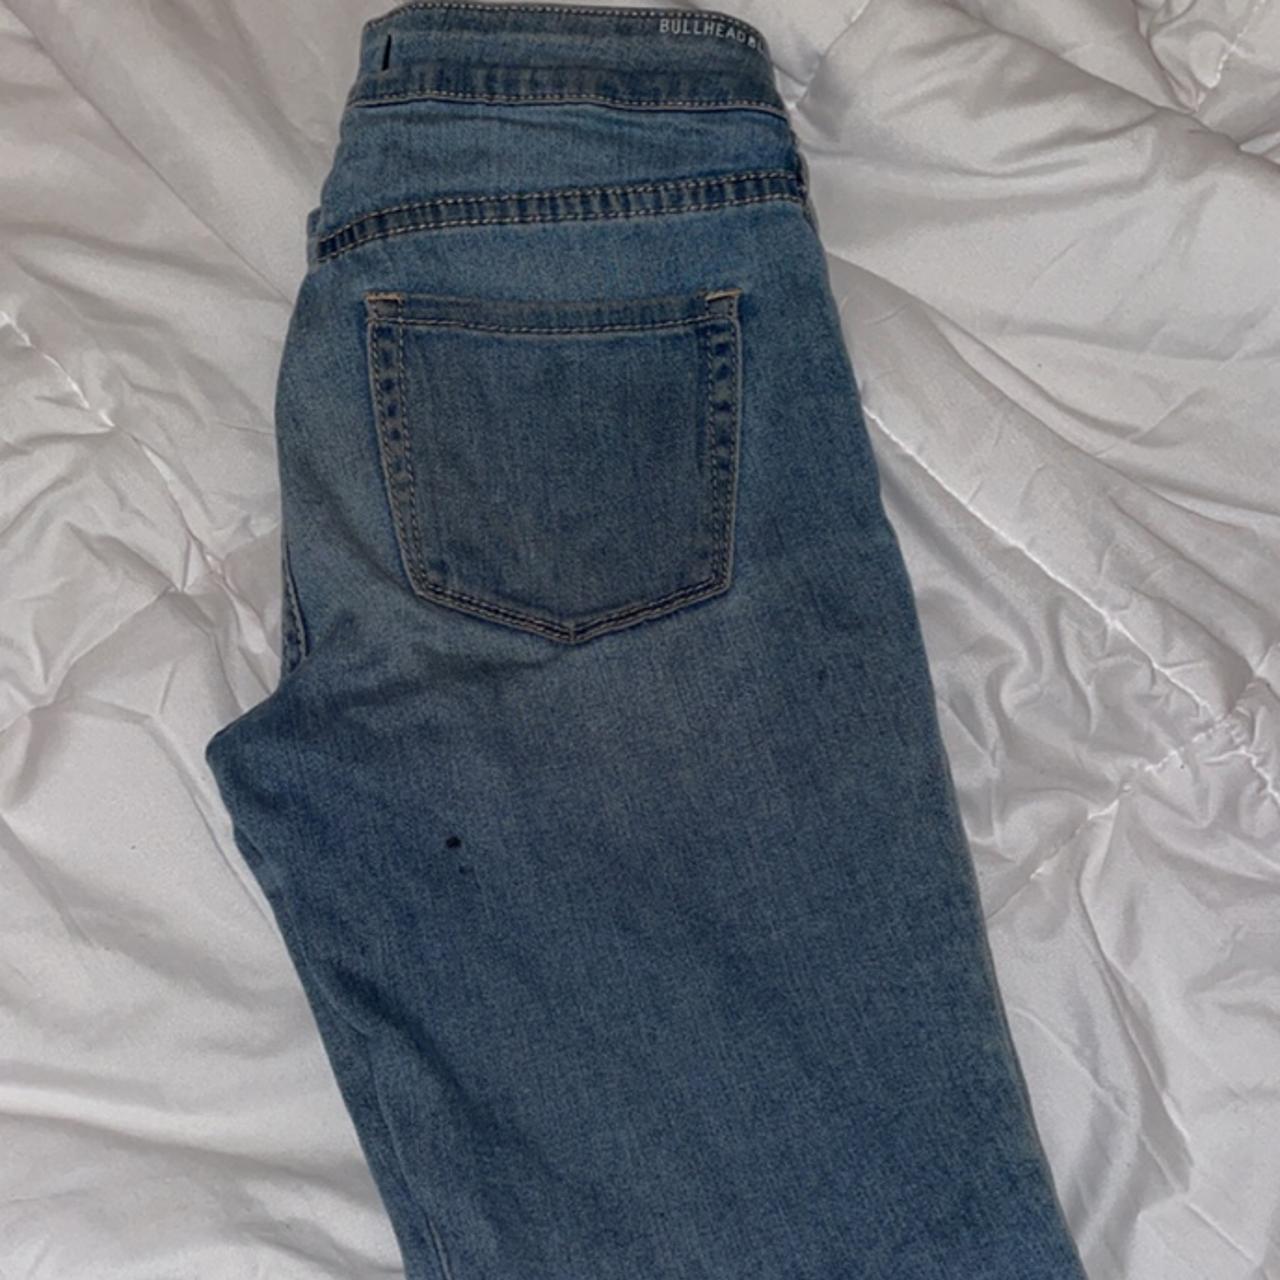 Low rise bullhead jeans Size 3 best fit like a 0 or... - Depop